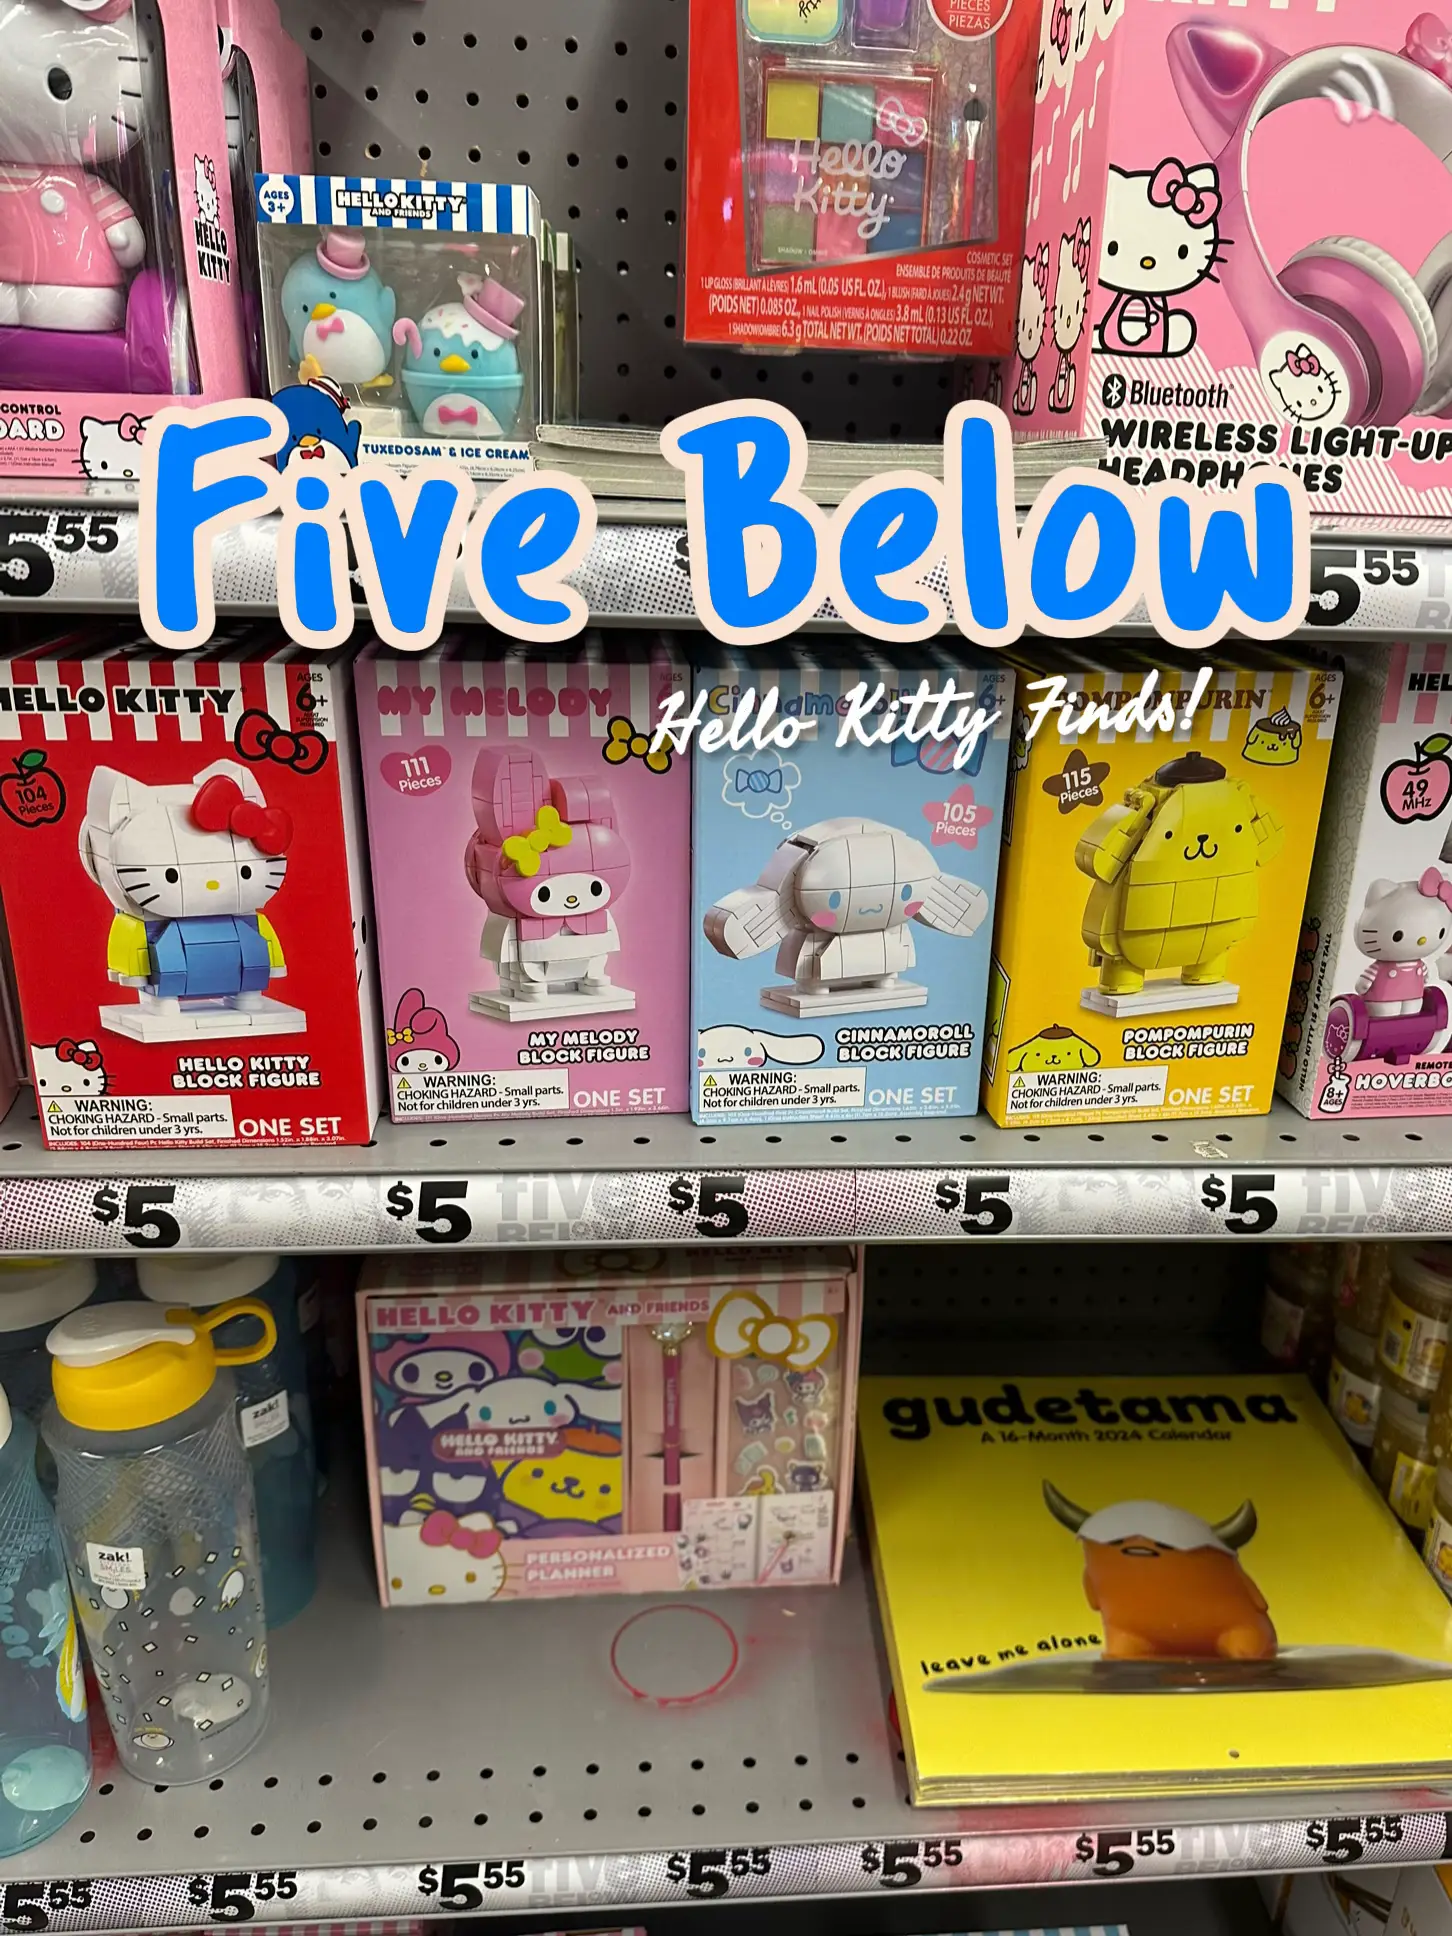 Hello Kitty® Remote Control Hover Board, Five Below